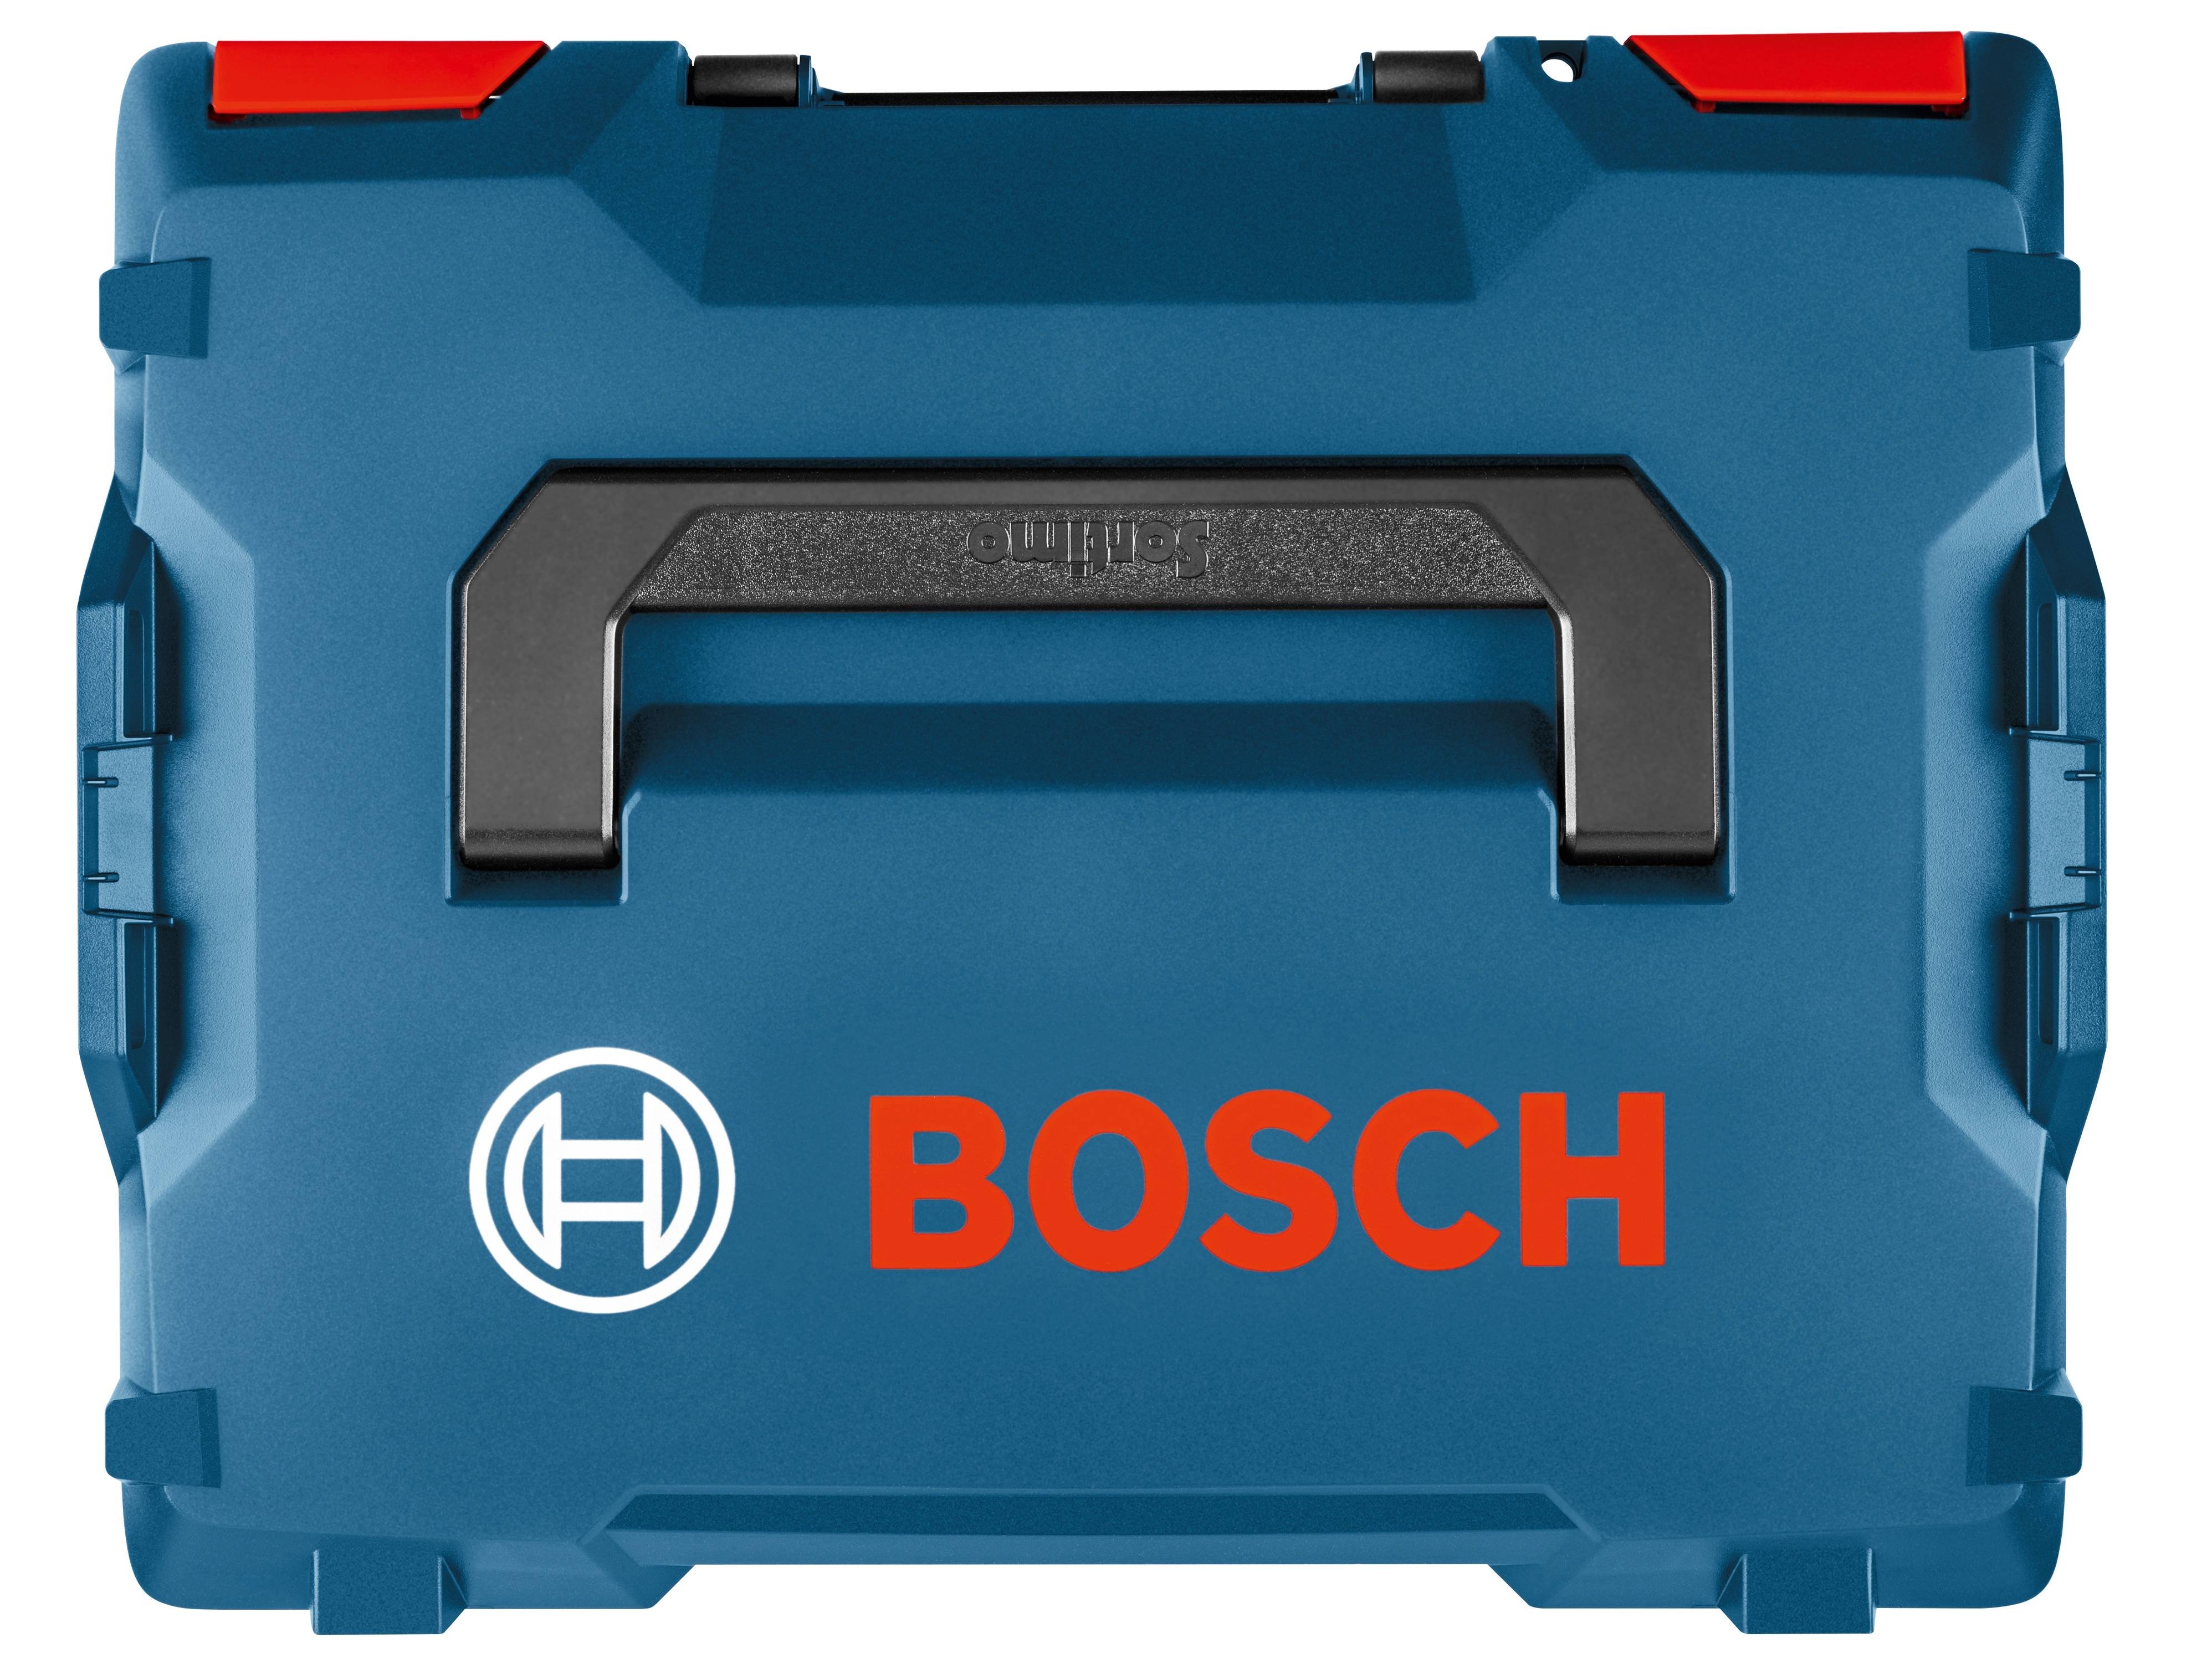 Bosch Professional Koffersystem LS-Boxx 306 MobilitySystem kaufen bei OBI